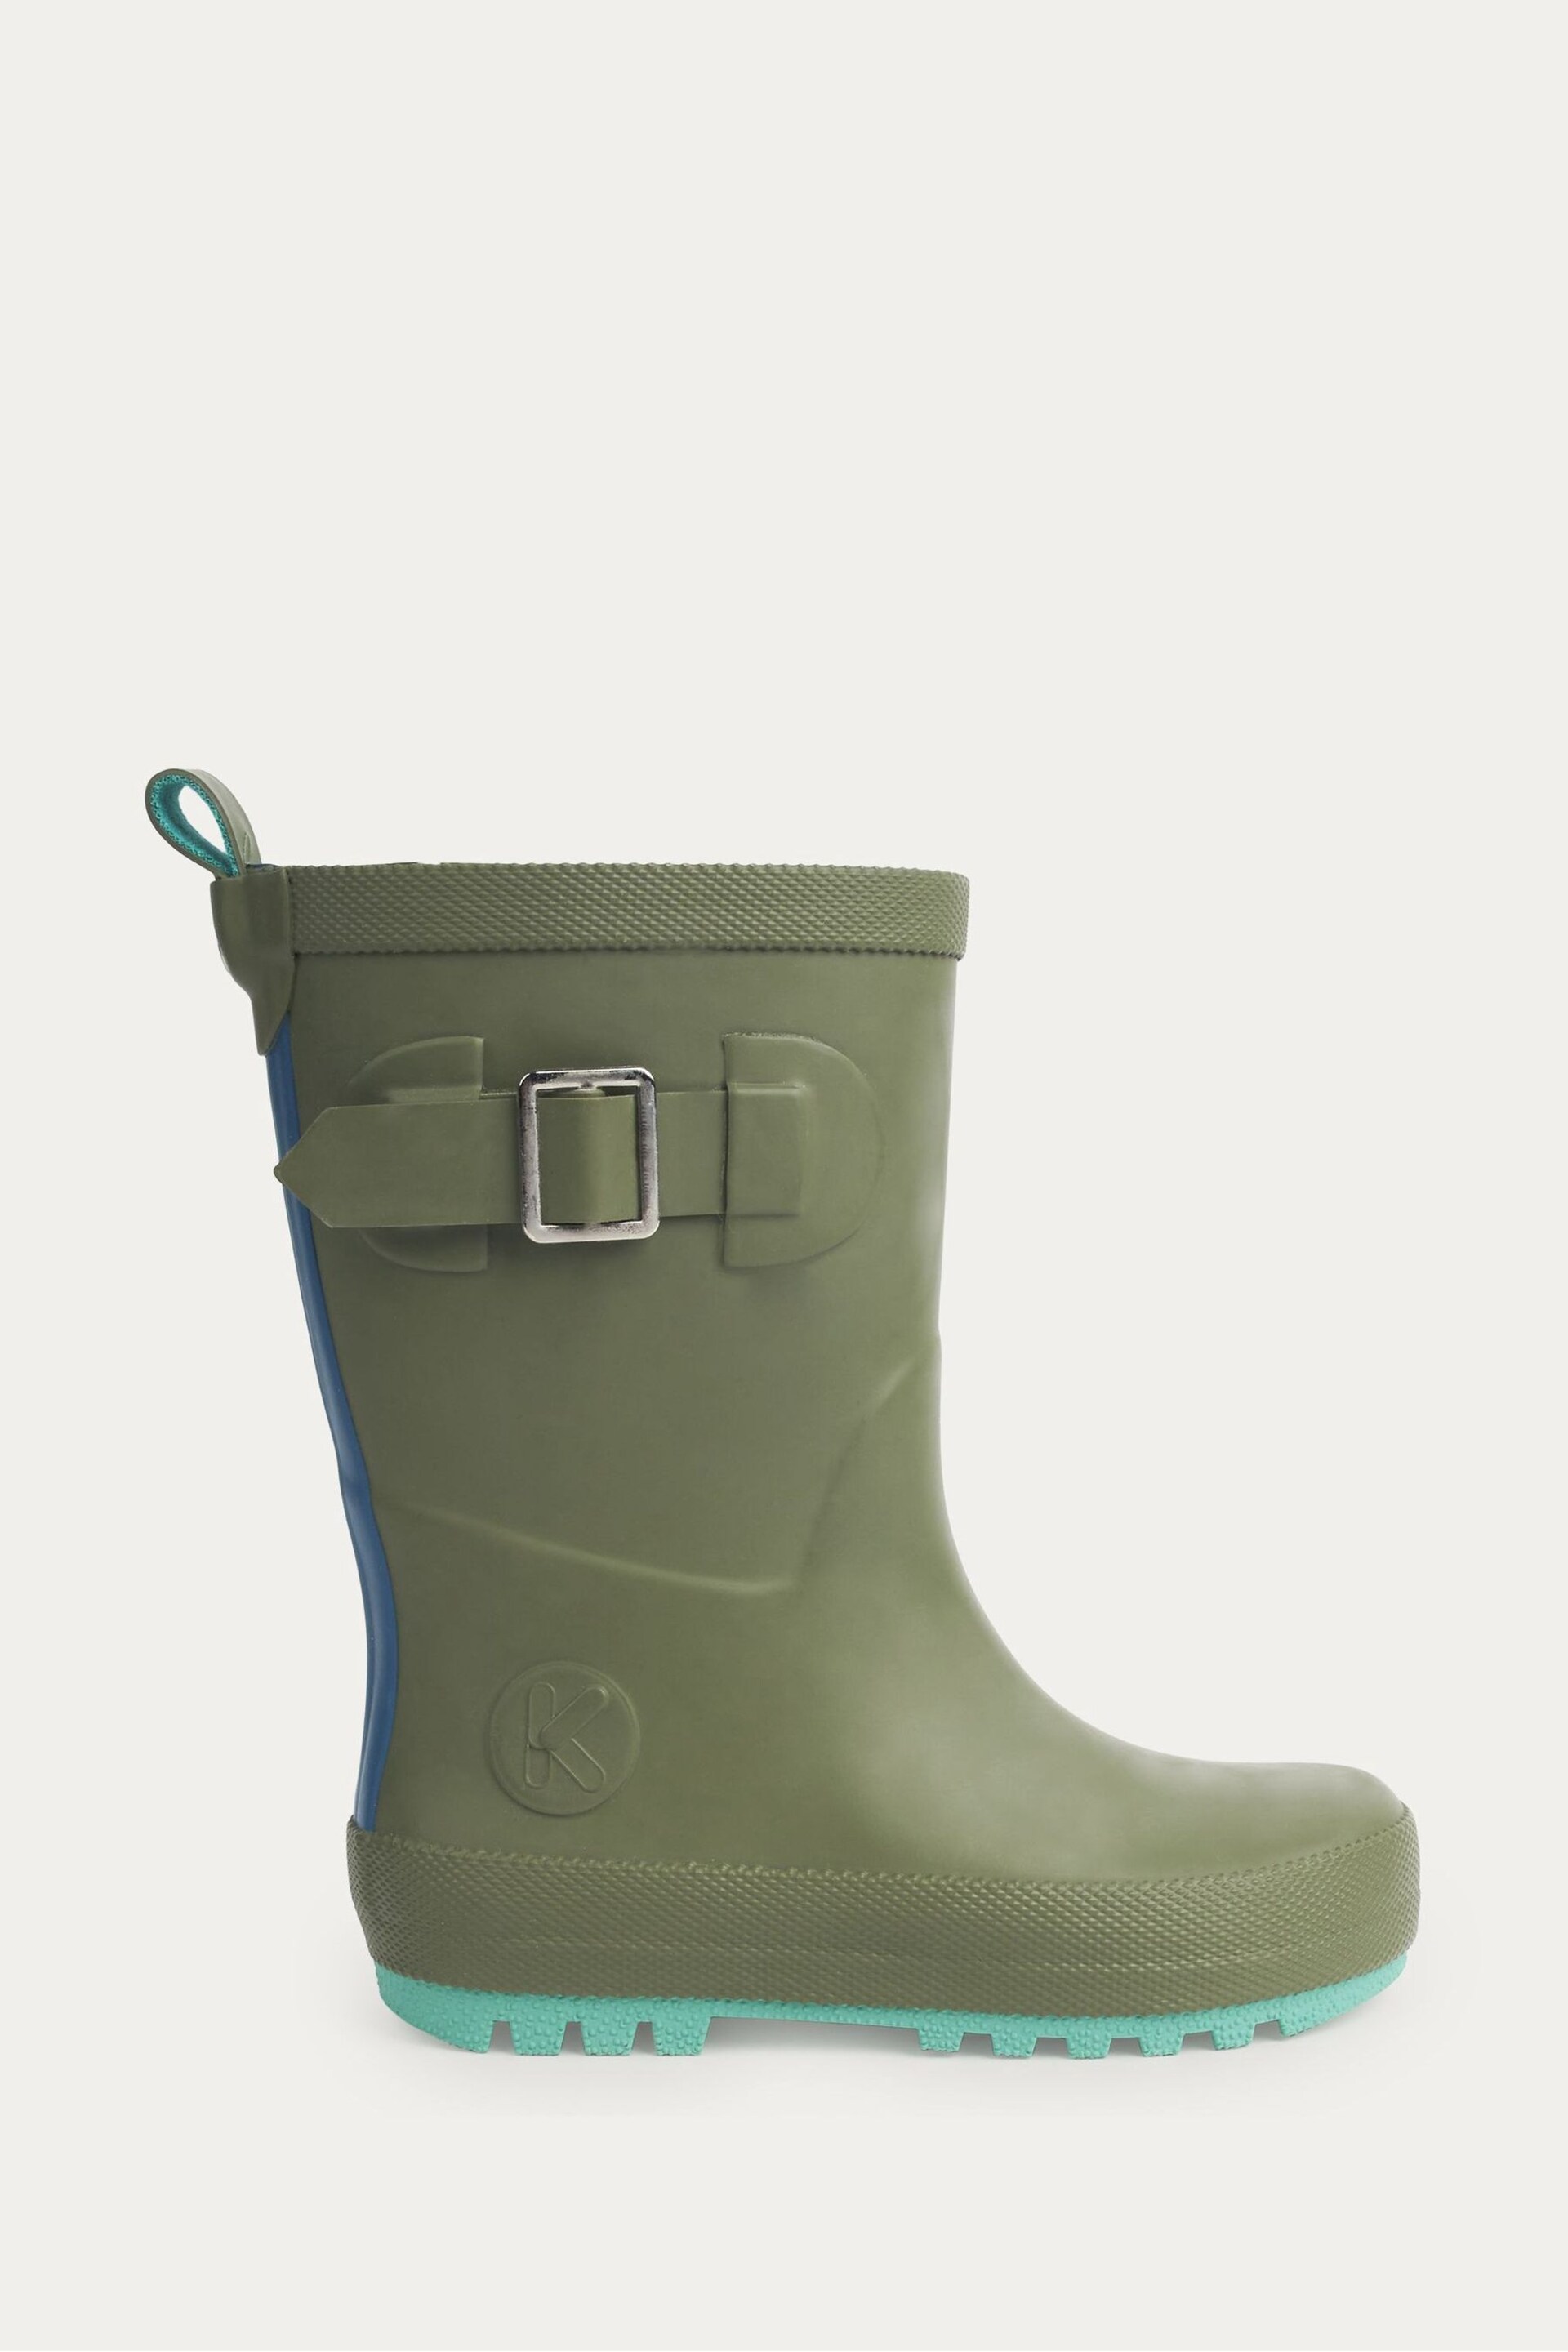 KIDLY Rain Boots with Binding - Image 1 of 5